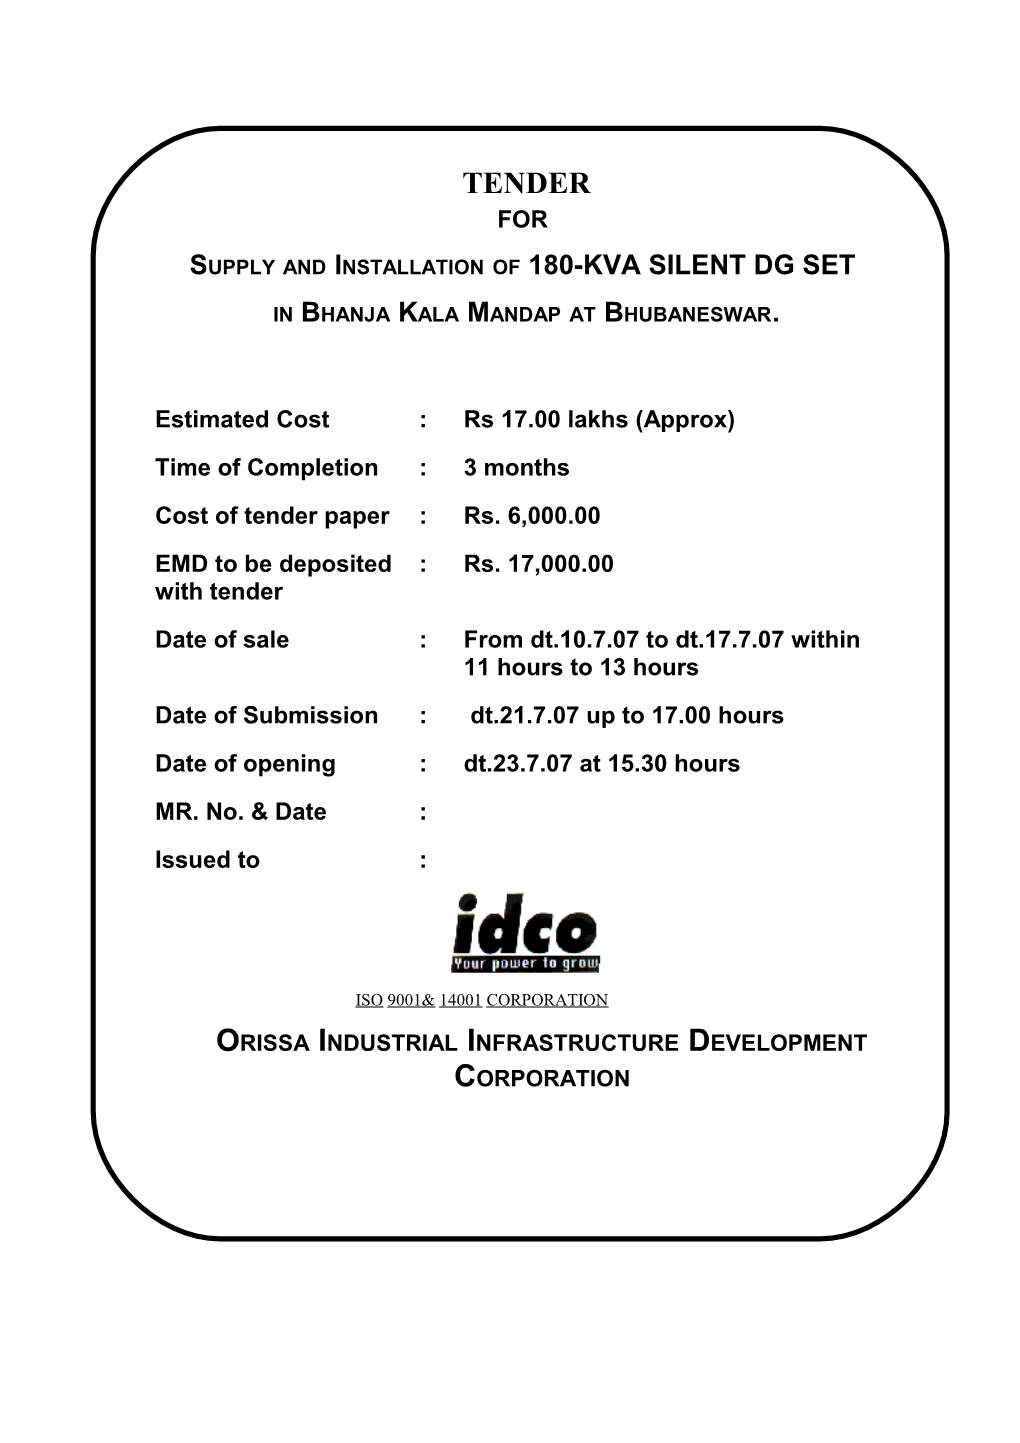 Supply and Installation of 180-KVA Silent Dg Set